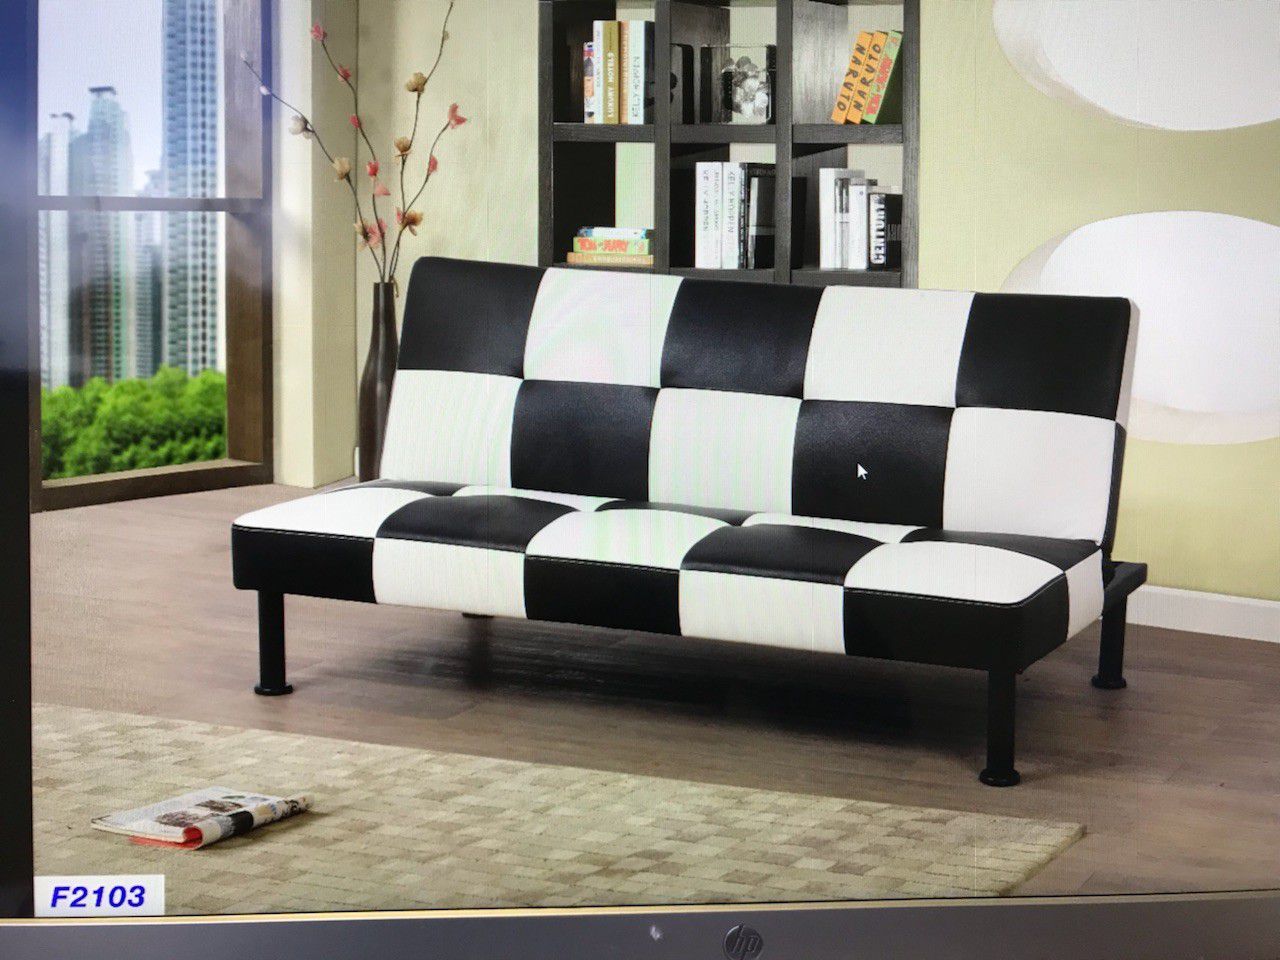 Blk/ white futon sofa bed (new)